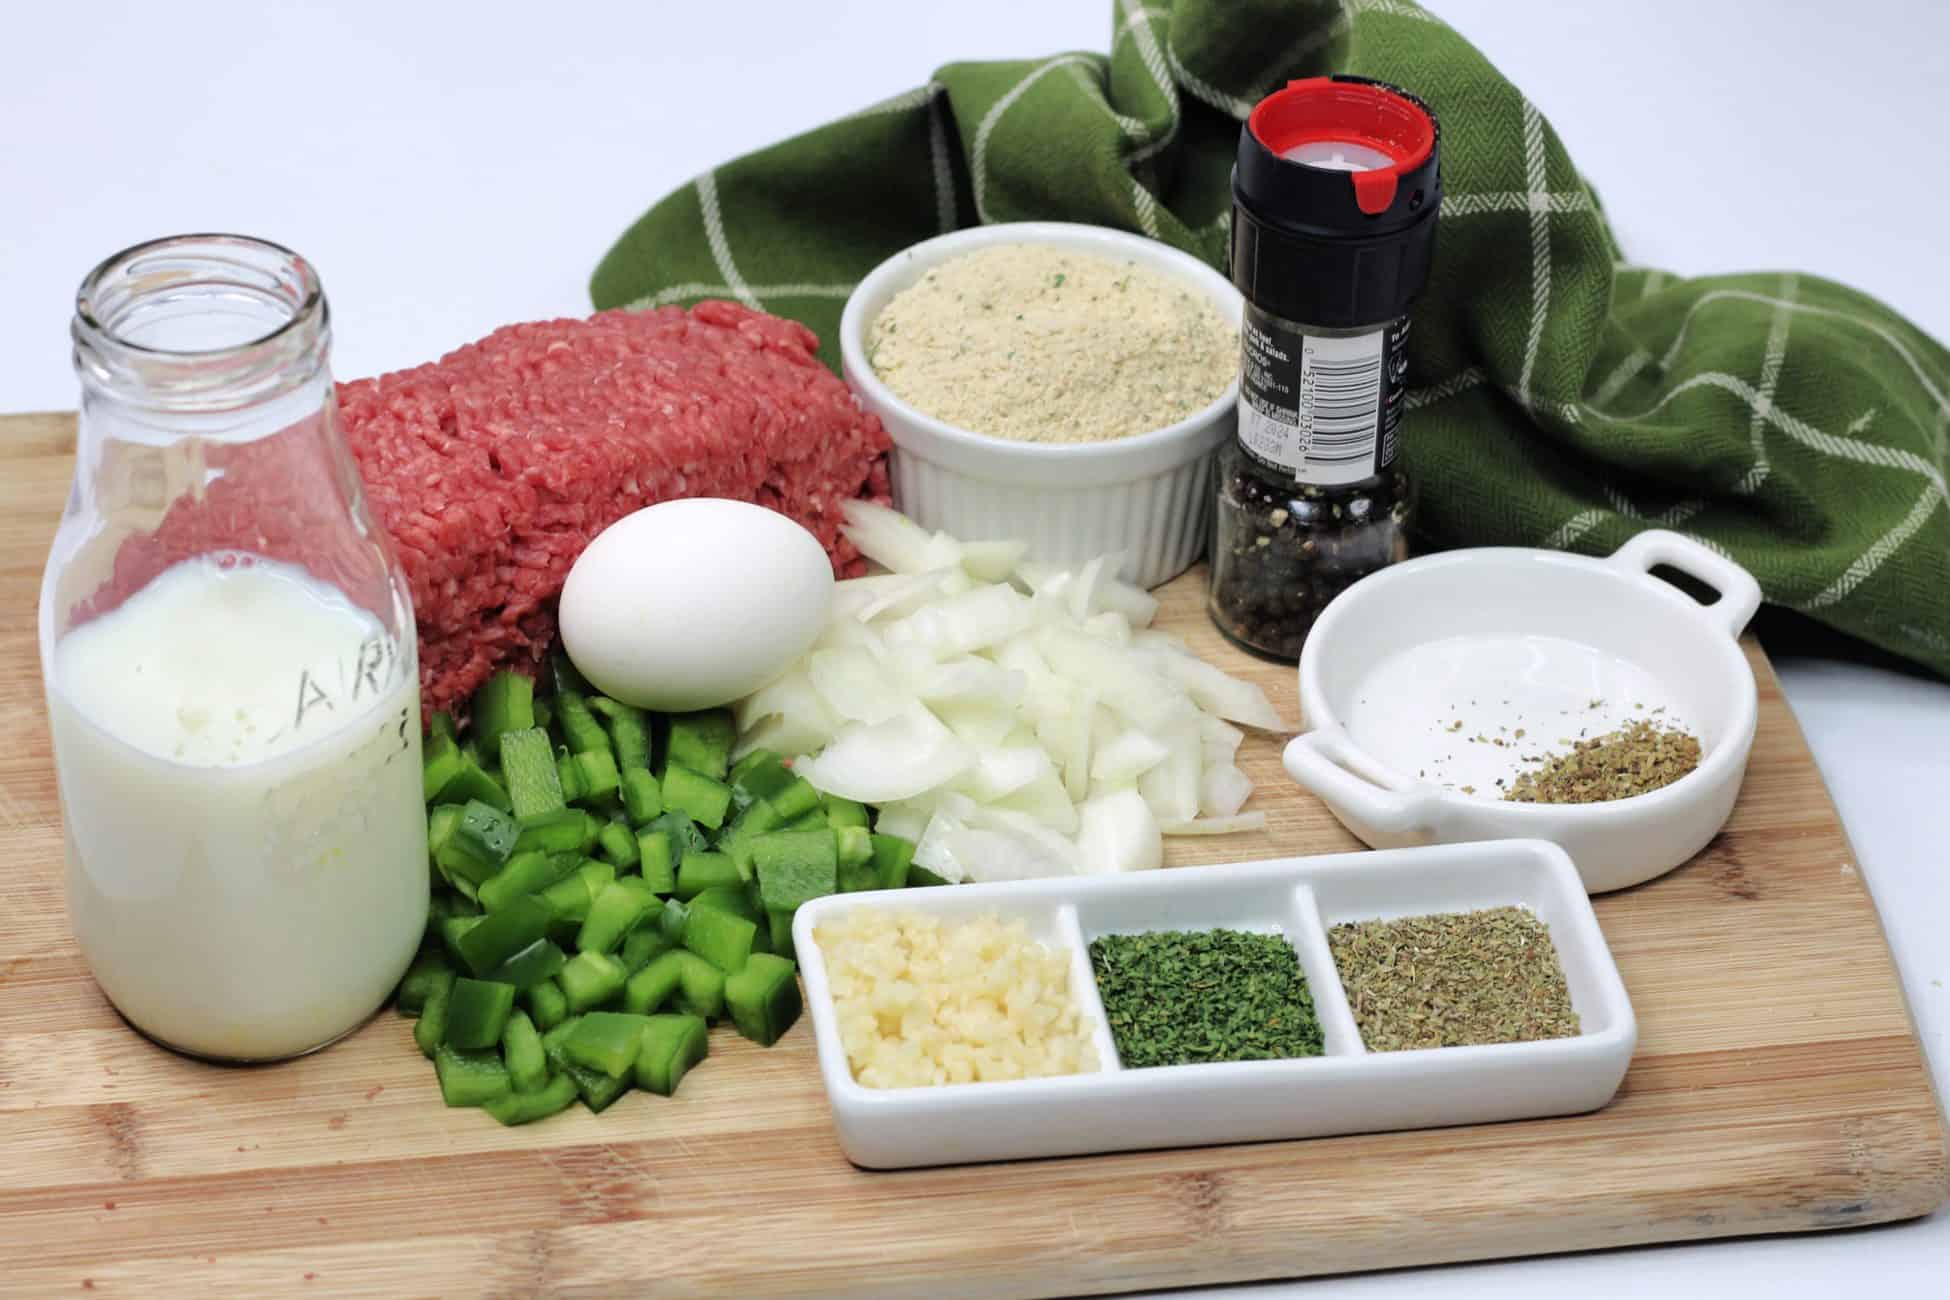 philly cheesesteak meatloaf ingredients